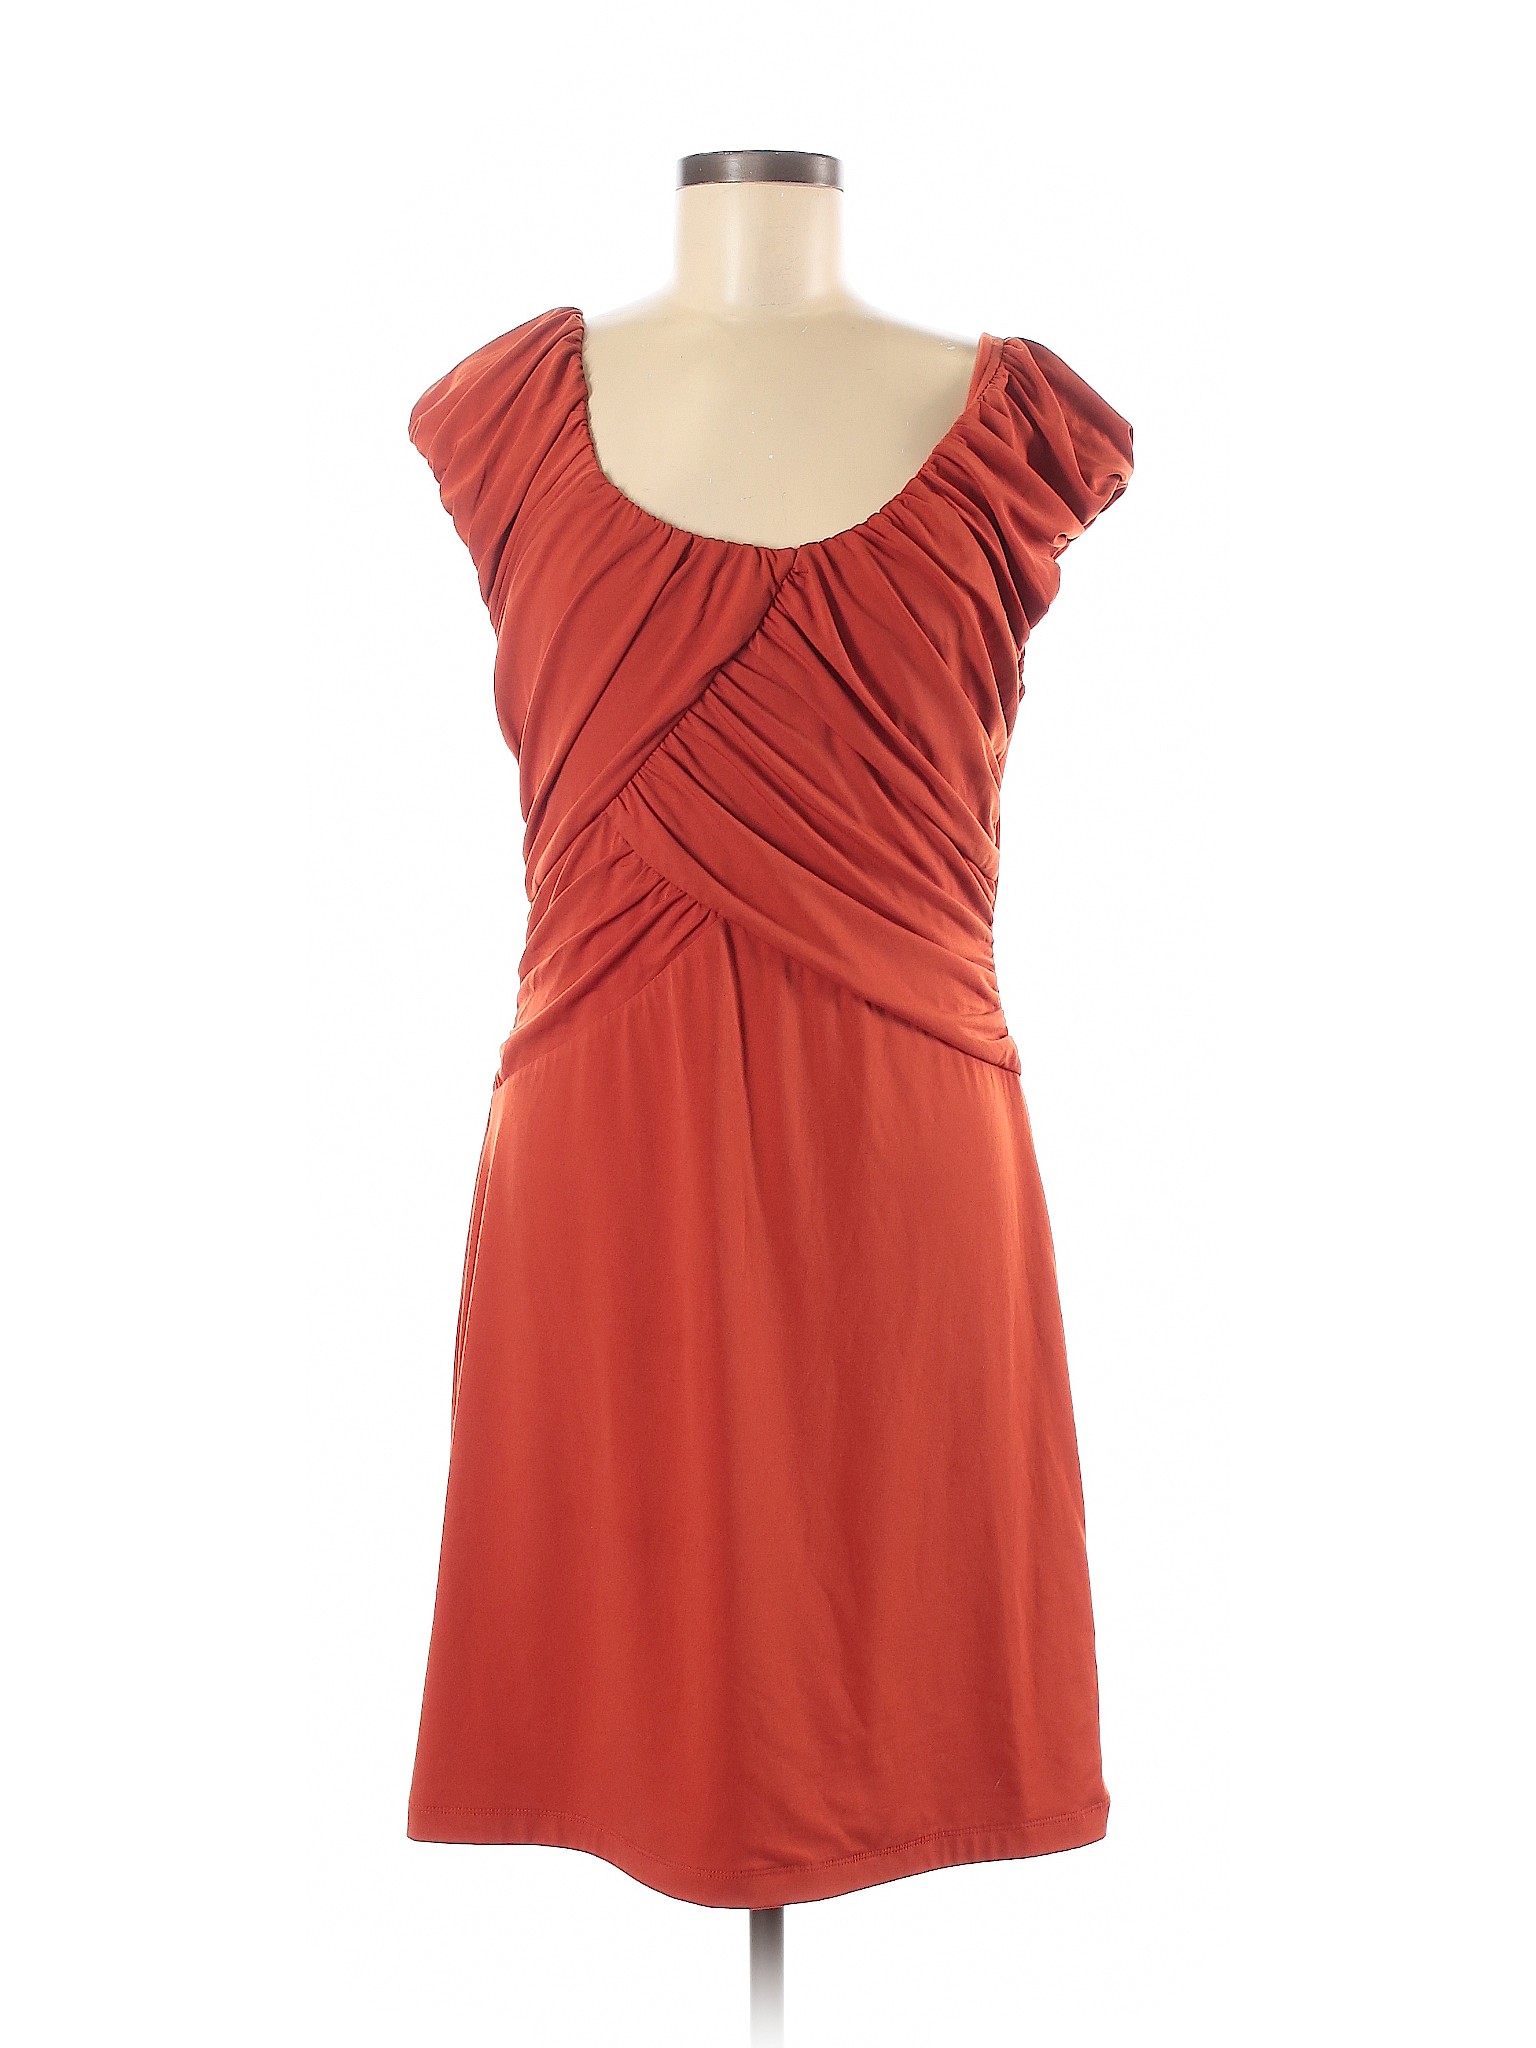 Allen B. by Allen Schwartz Women Orange Casual Dress M | eBay